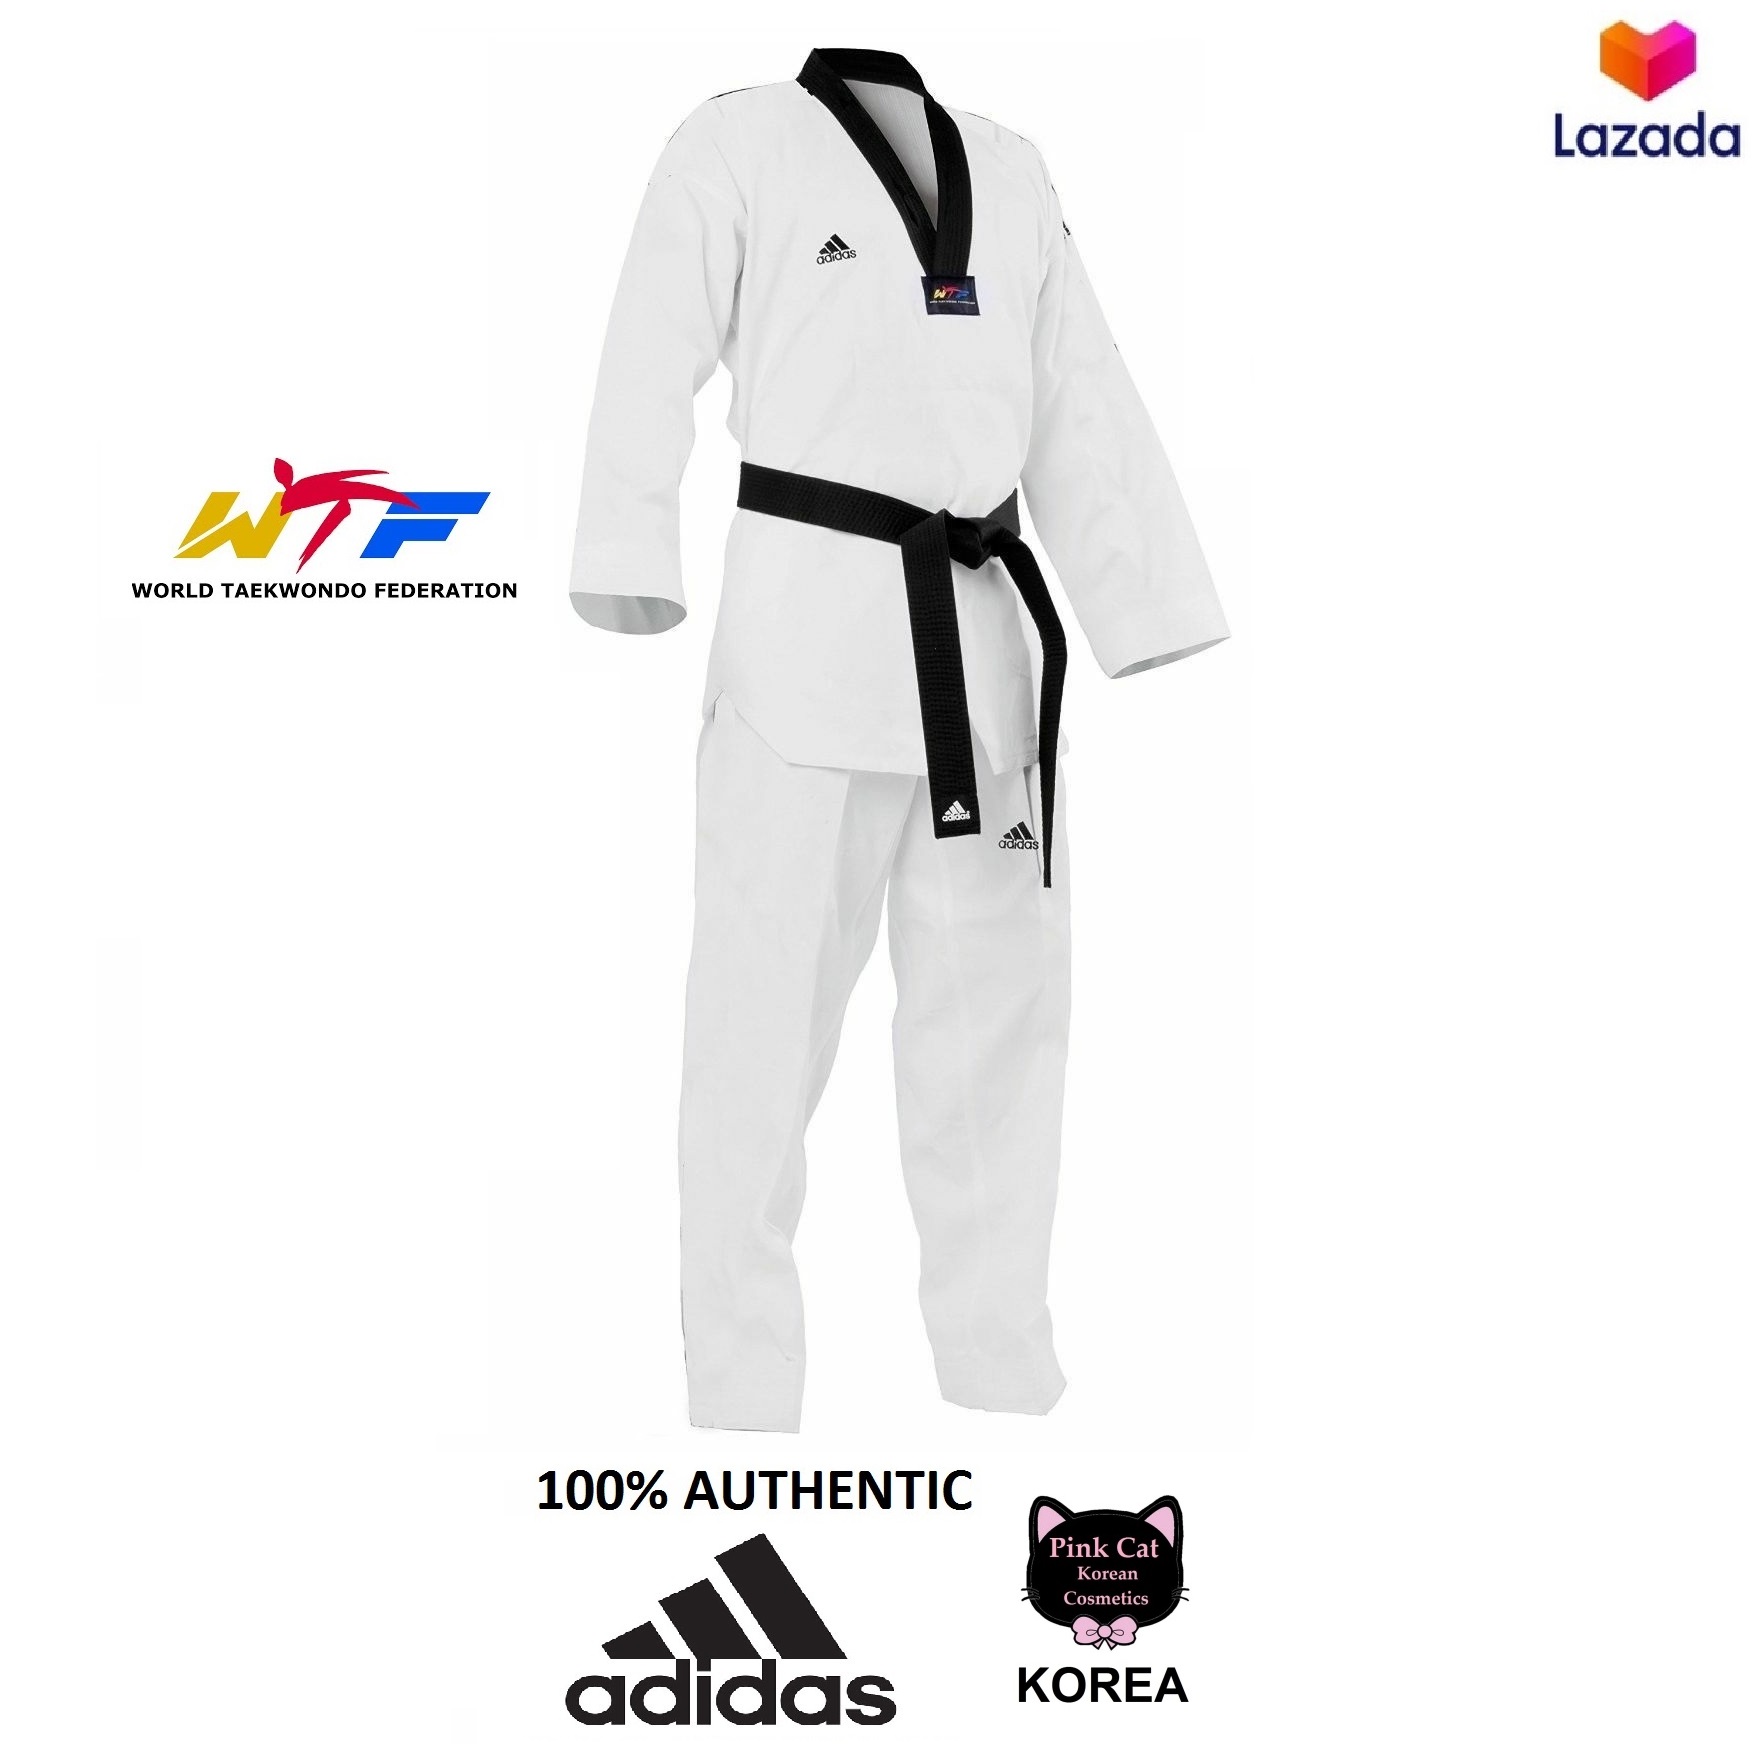 Estúpido borde Hay una necesidad de A D I D A S Performance World Taekwondo Federation Uniform (White/Black) |  Lazada PH